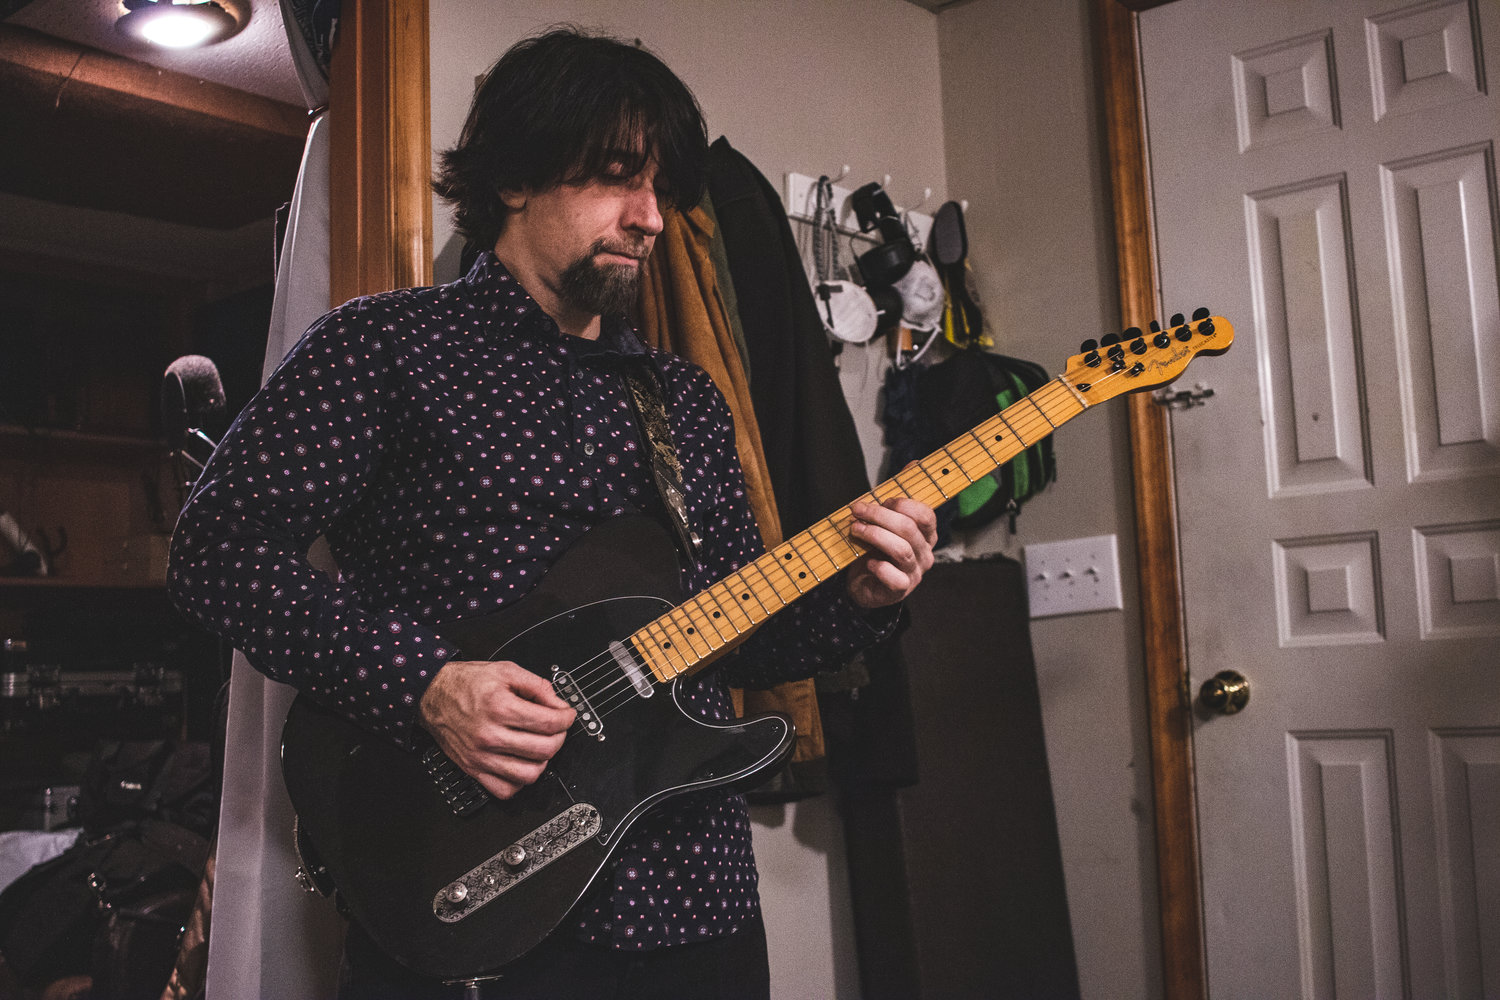 Jason Merrill records a guitar track in his home studio in Hawley, PA.